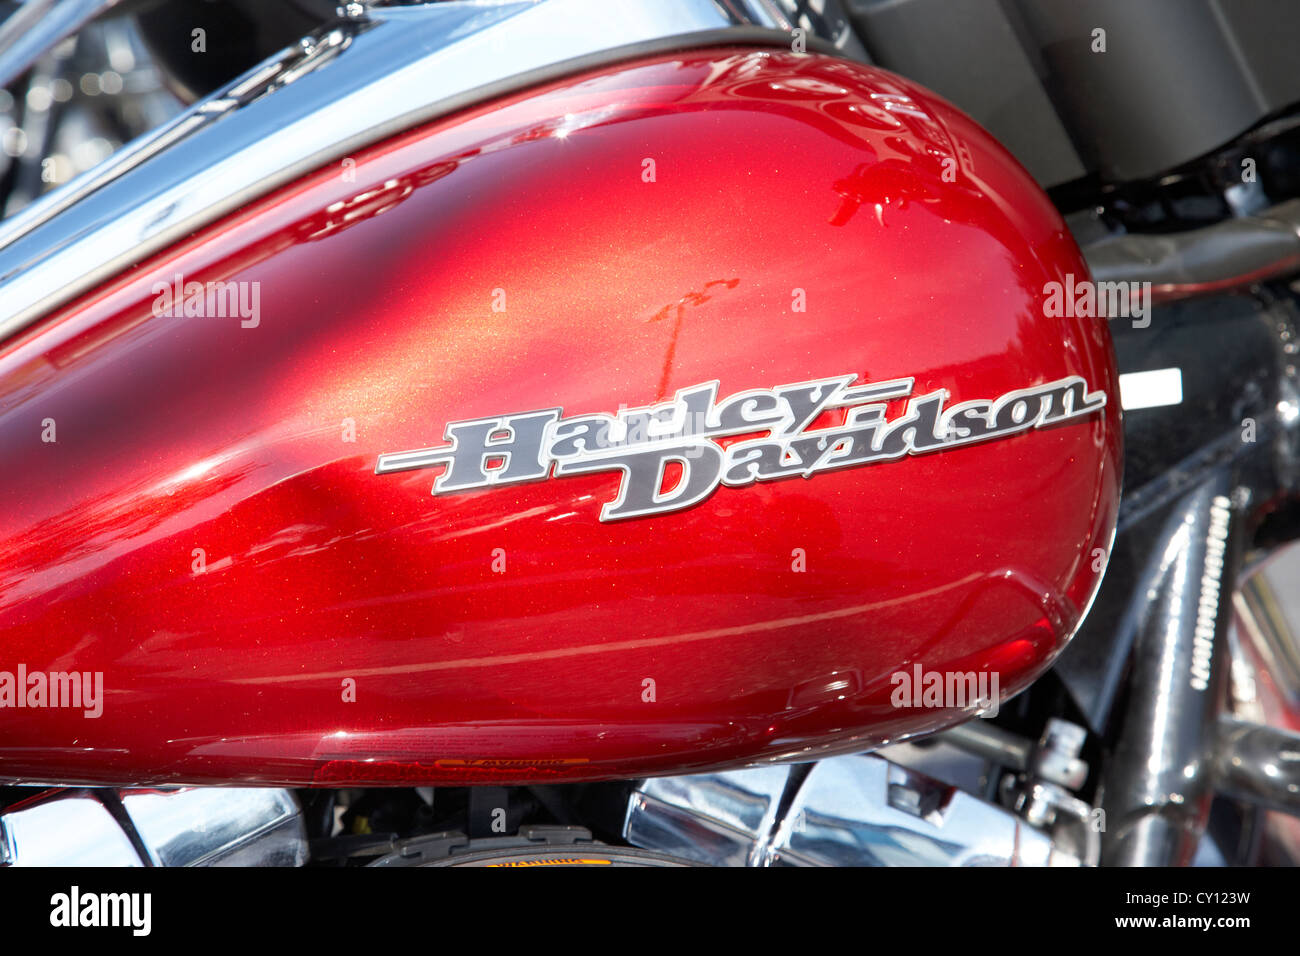 Le logo Harley Davidson street glide moto orlando florida usa Banque D'Images